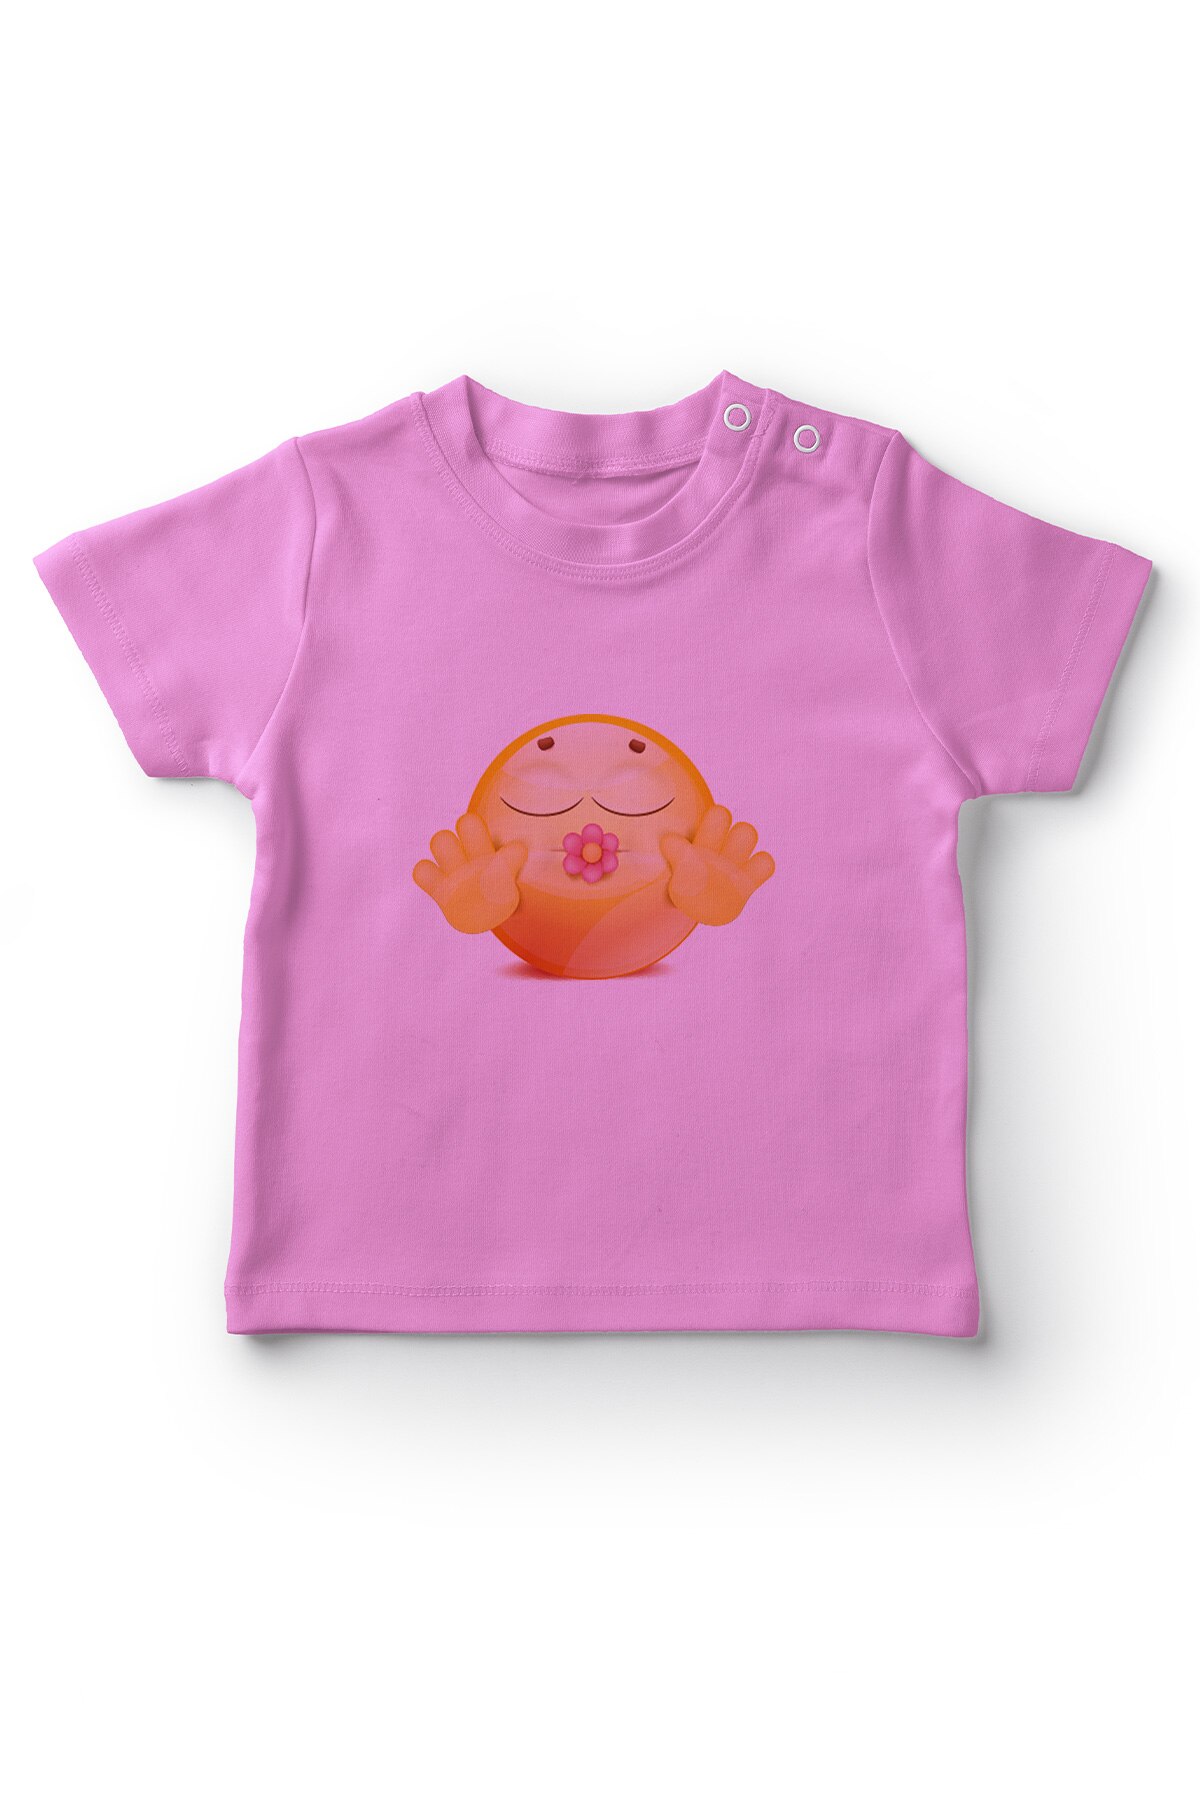 Angemiel Baby Leuke Emoji Meisje Baby T-shirt Roze